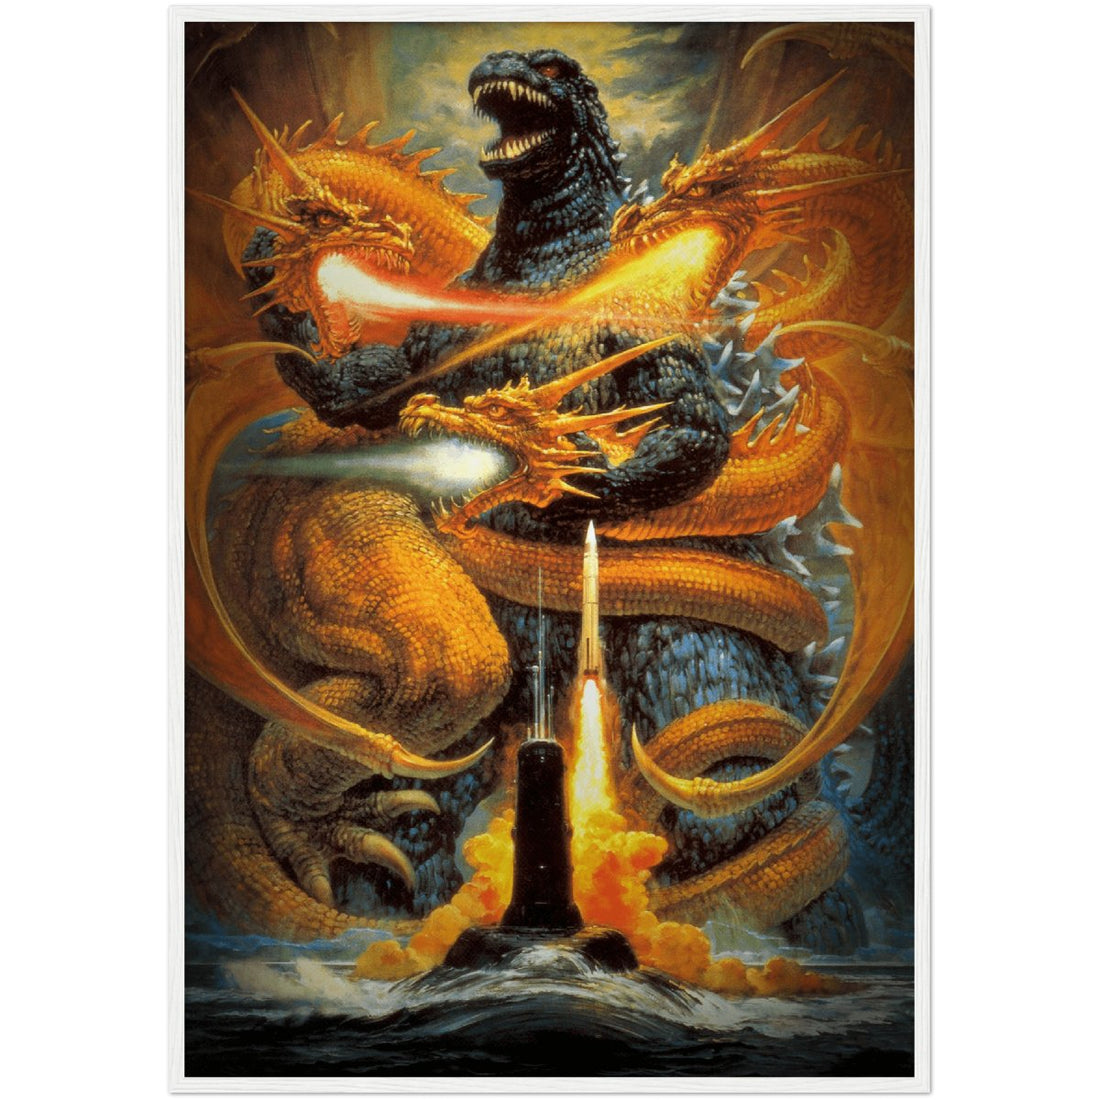 Godzilla ゴジラ (1954) Classic Matte Paper Wooden Framed Poster - TINT - Print Material - TINT - e96817f3-9bb4-4cc4-8cd0-bd812b05a169